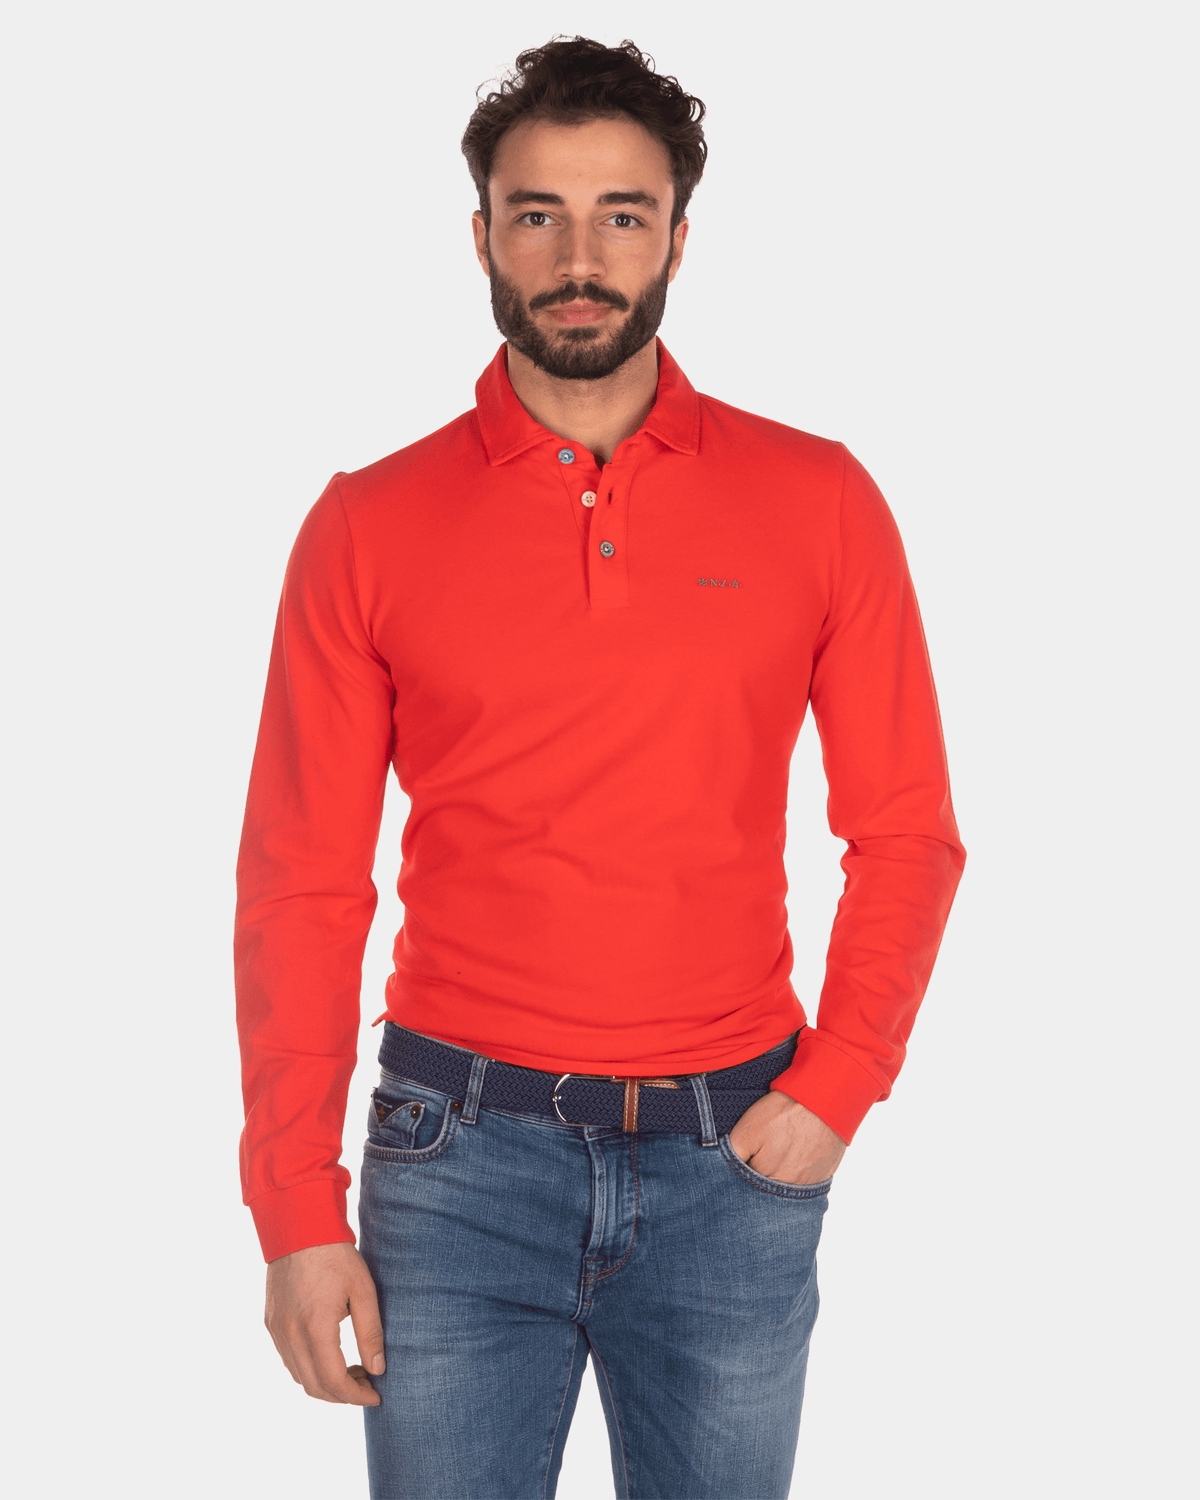 Camiseta Rugby Lisa - Orange Red